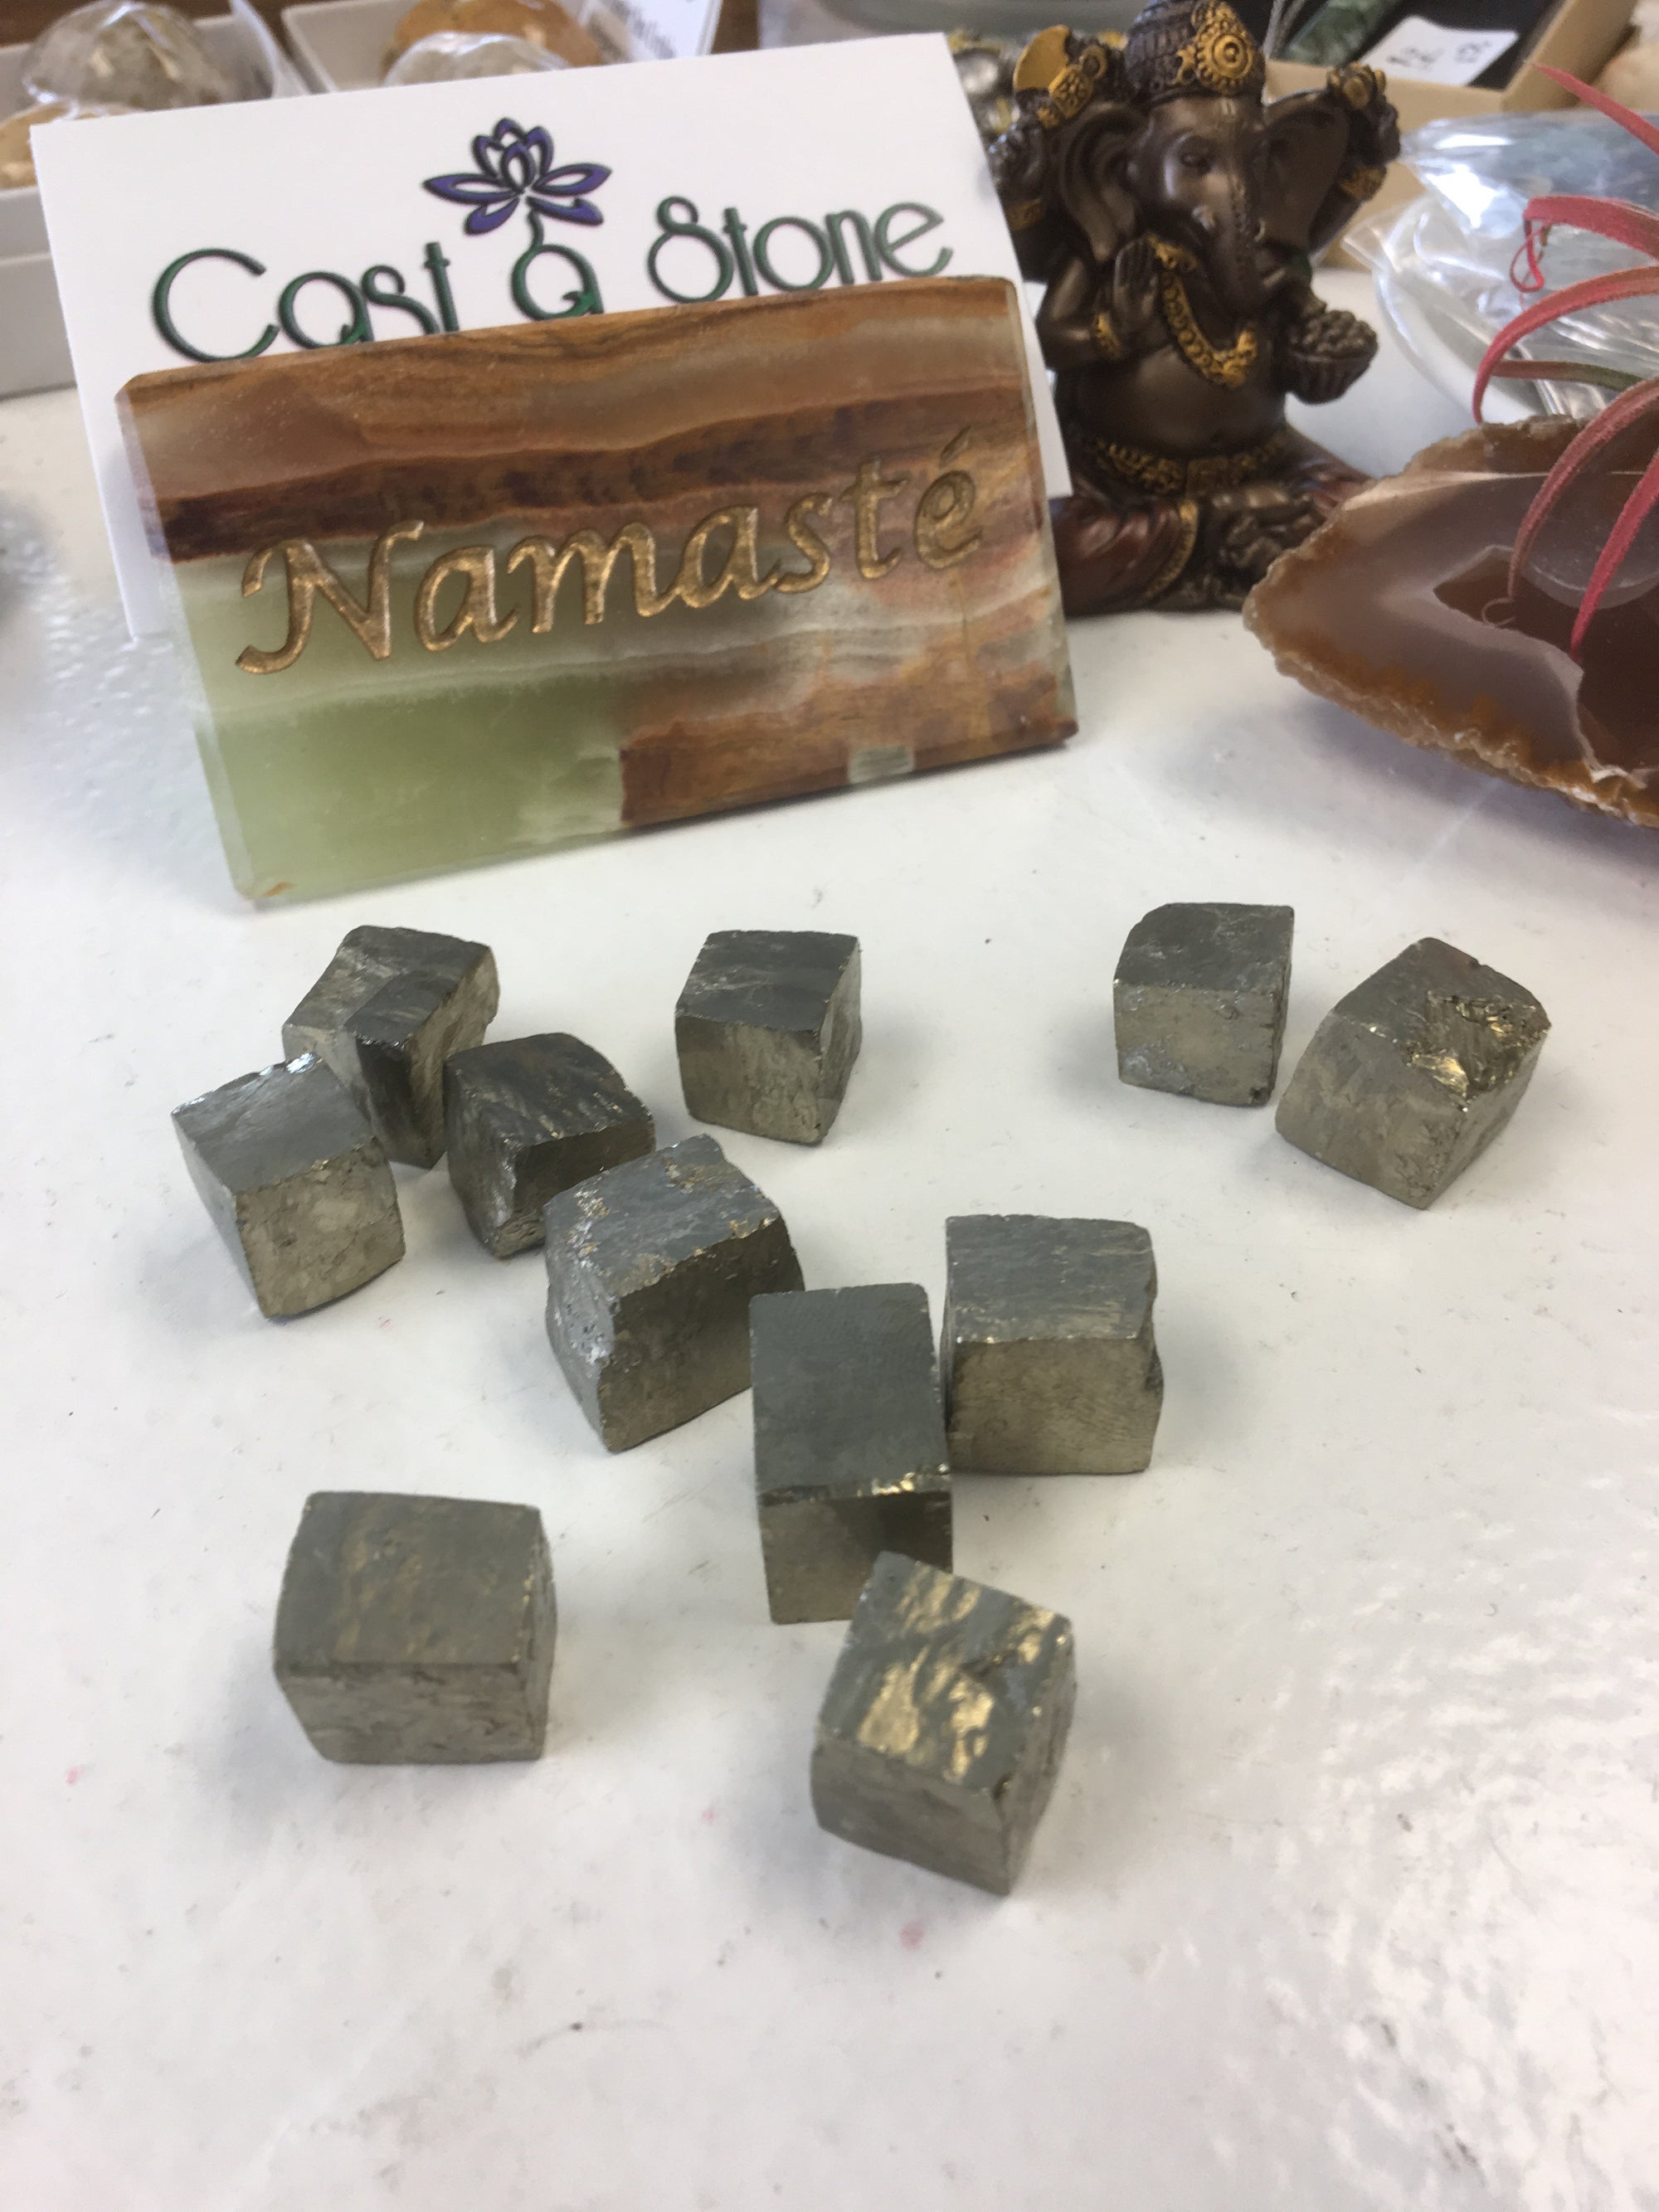 Pyrite cubes tumbled single gemstone - Cast a Stone